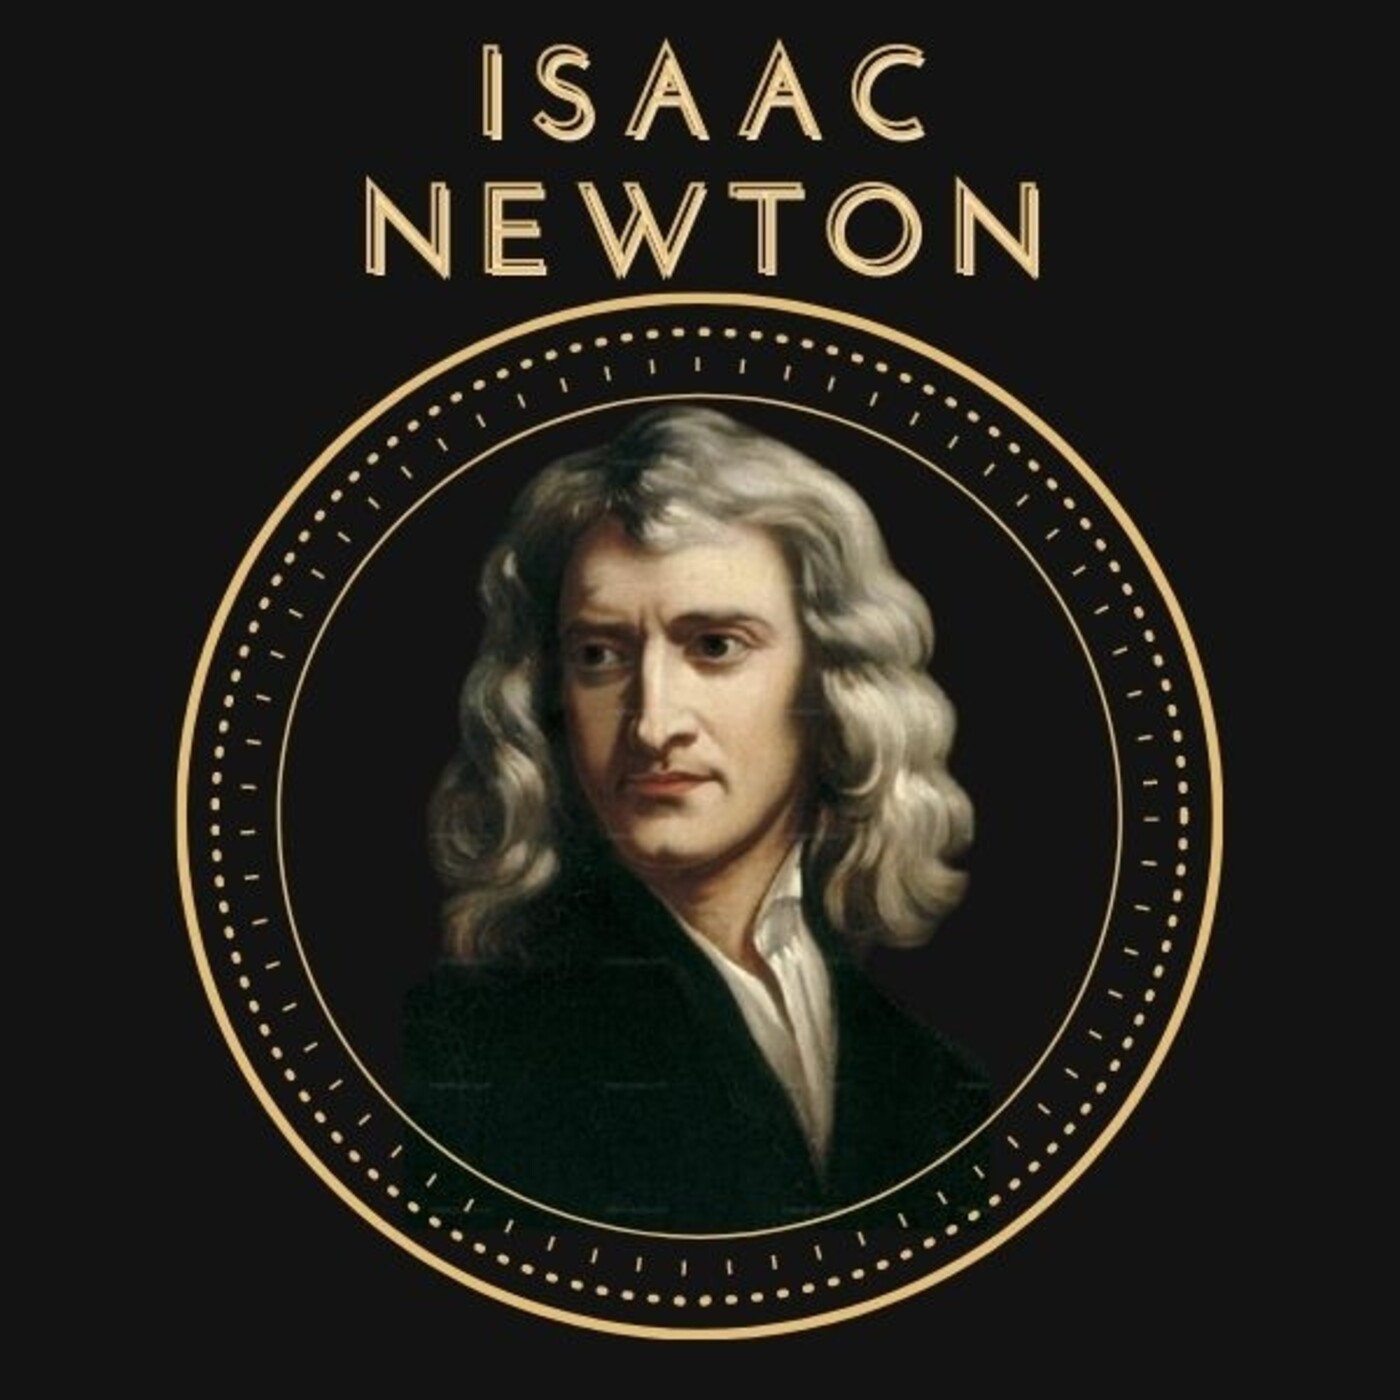 Ep. 9 Historia Oculta: Isaac Newton. El Alquimista Profeta